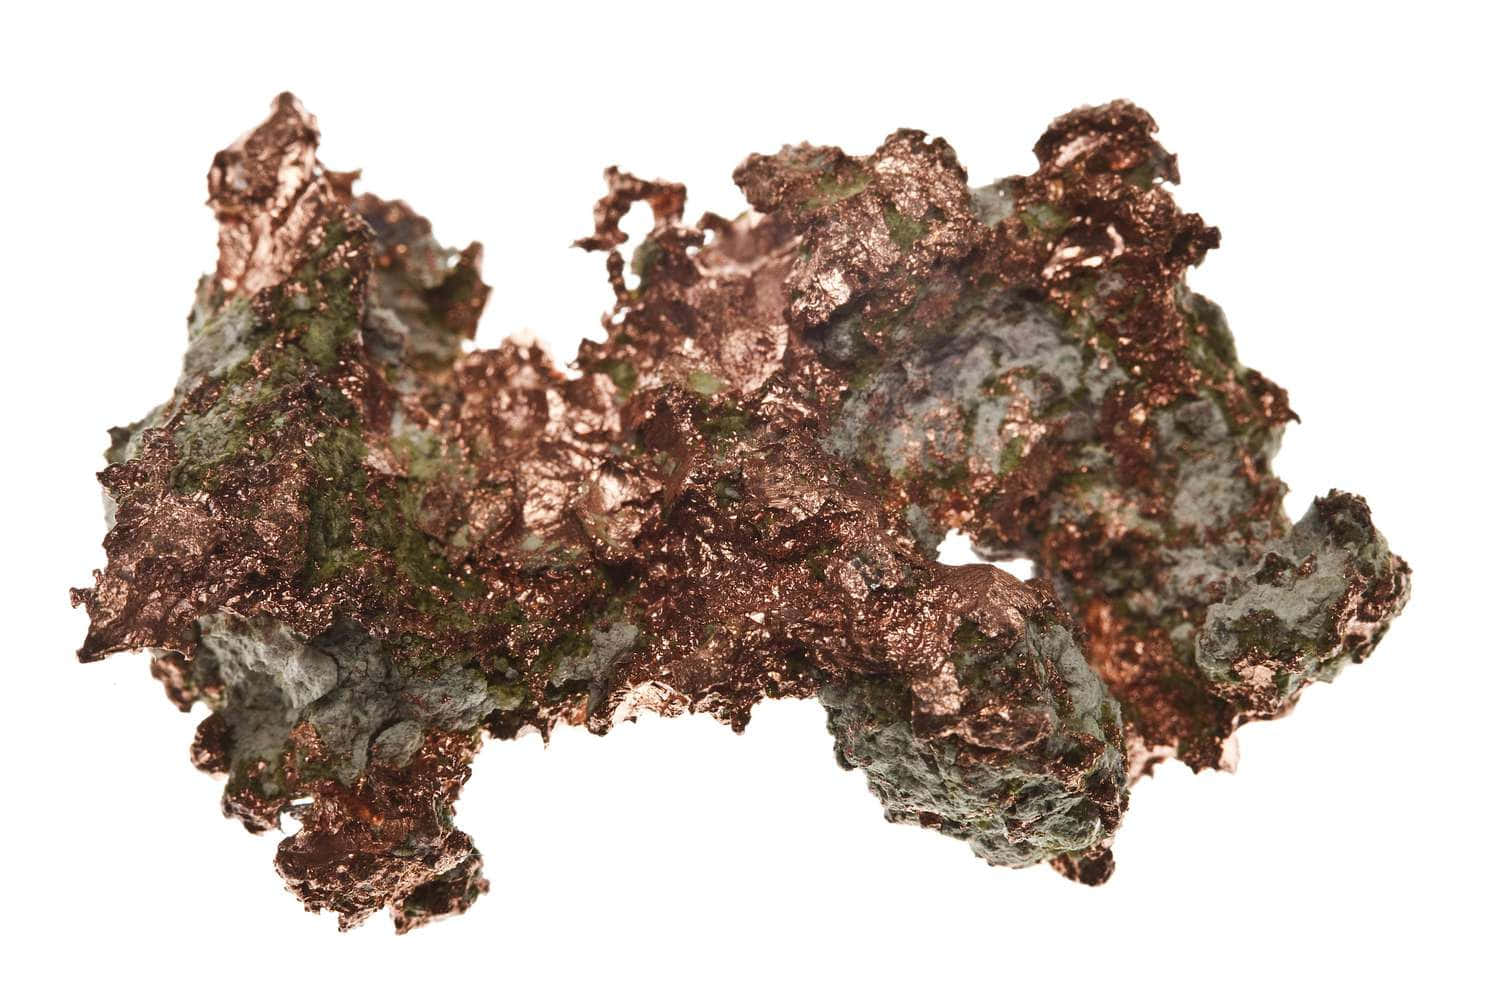 Native Copper Specimen.jpg Background